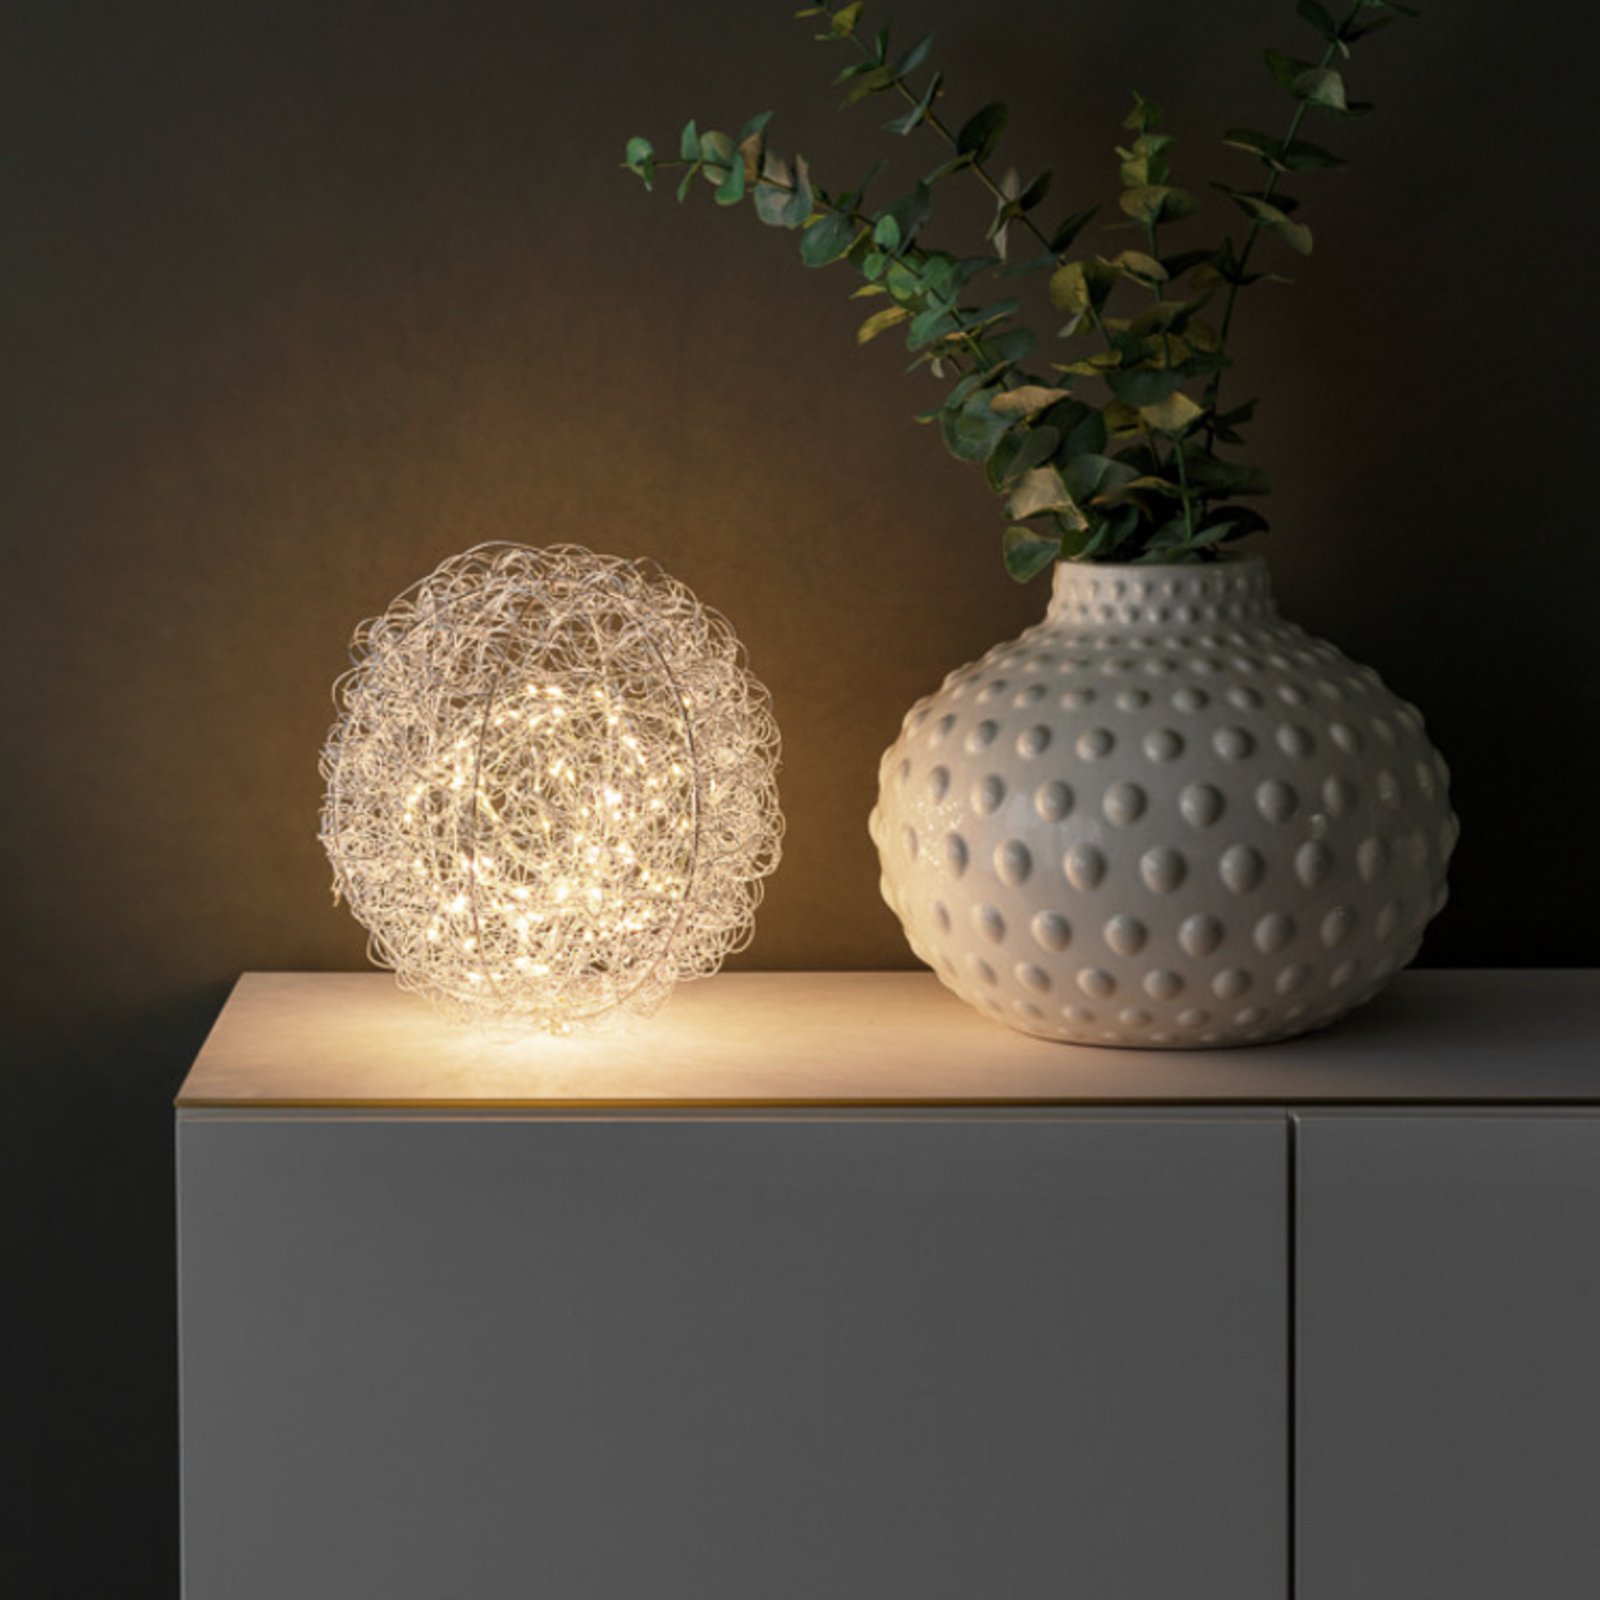 Lampe décorative LED Drahtball, Ø 30cm, 160 LEDs